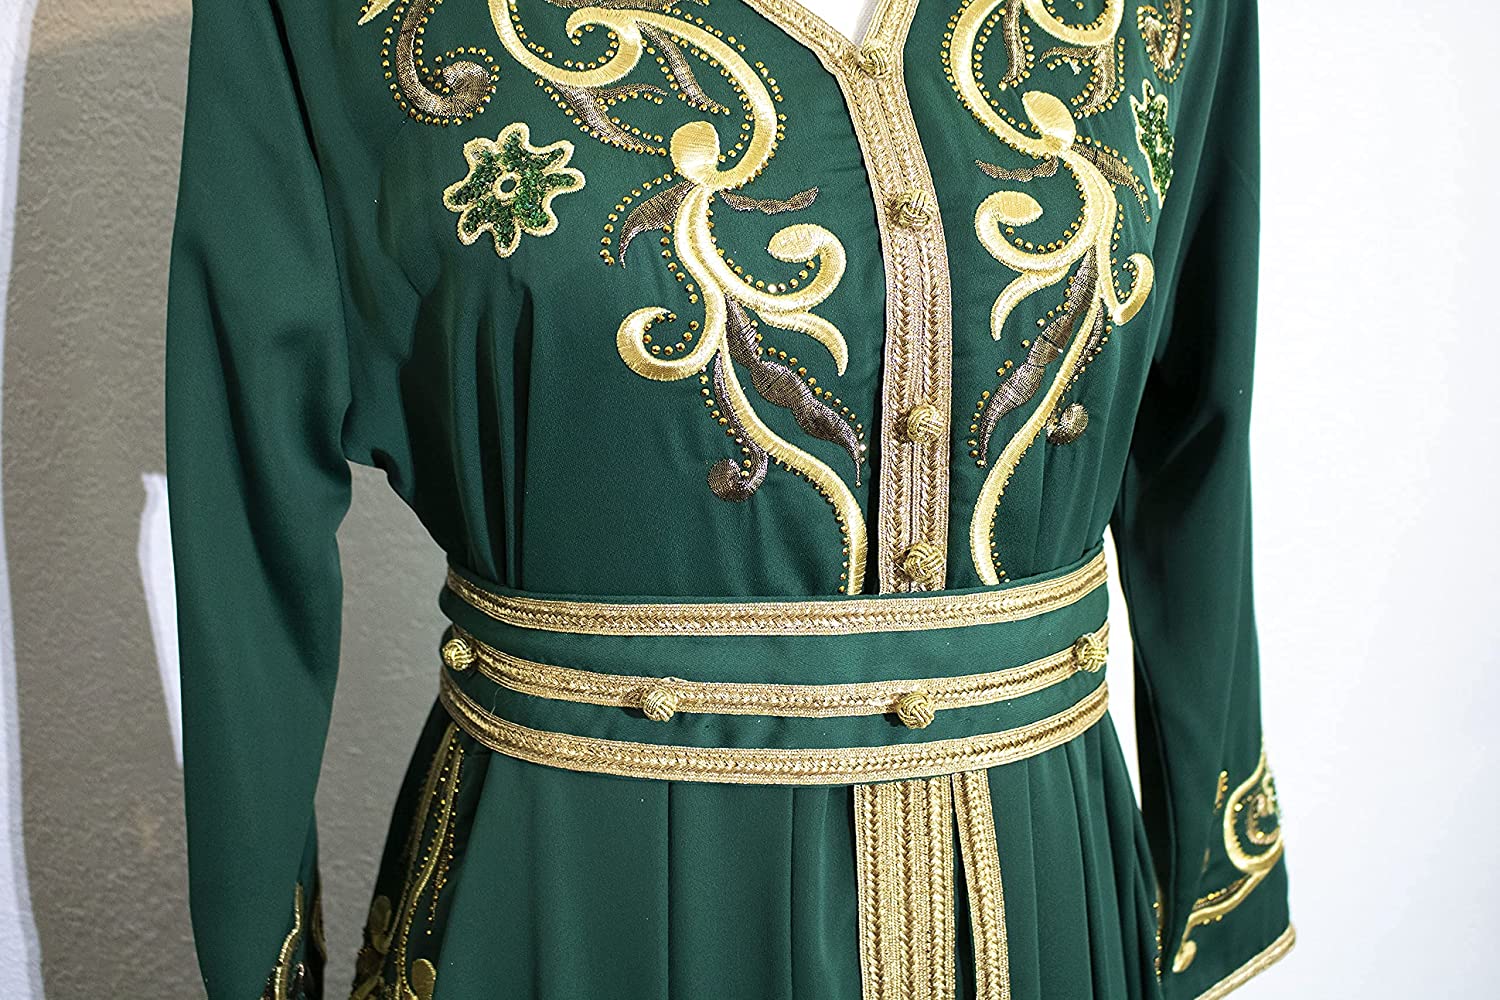 Marwa Fashion Women’s Muslim Green Color Kaftan/Caftan - Arabic Islamic Moroccan X-Large Size Dress with Embroidery - خليجي/للبنات/نساء/عربي/فستان سهرة/